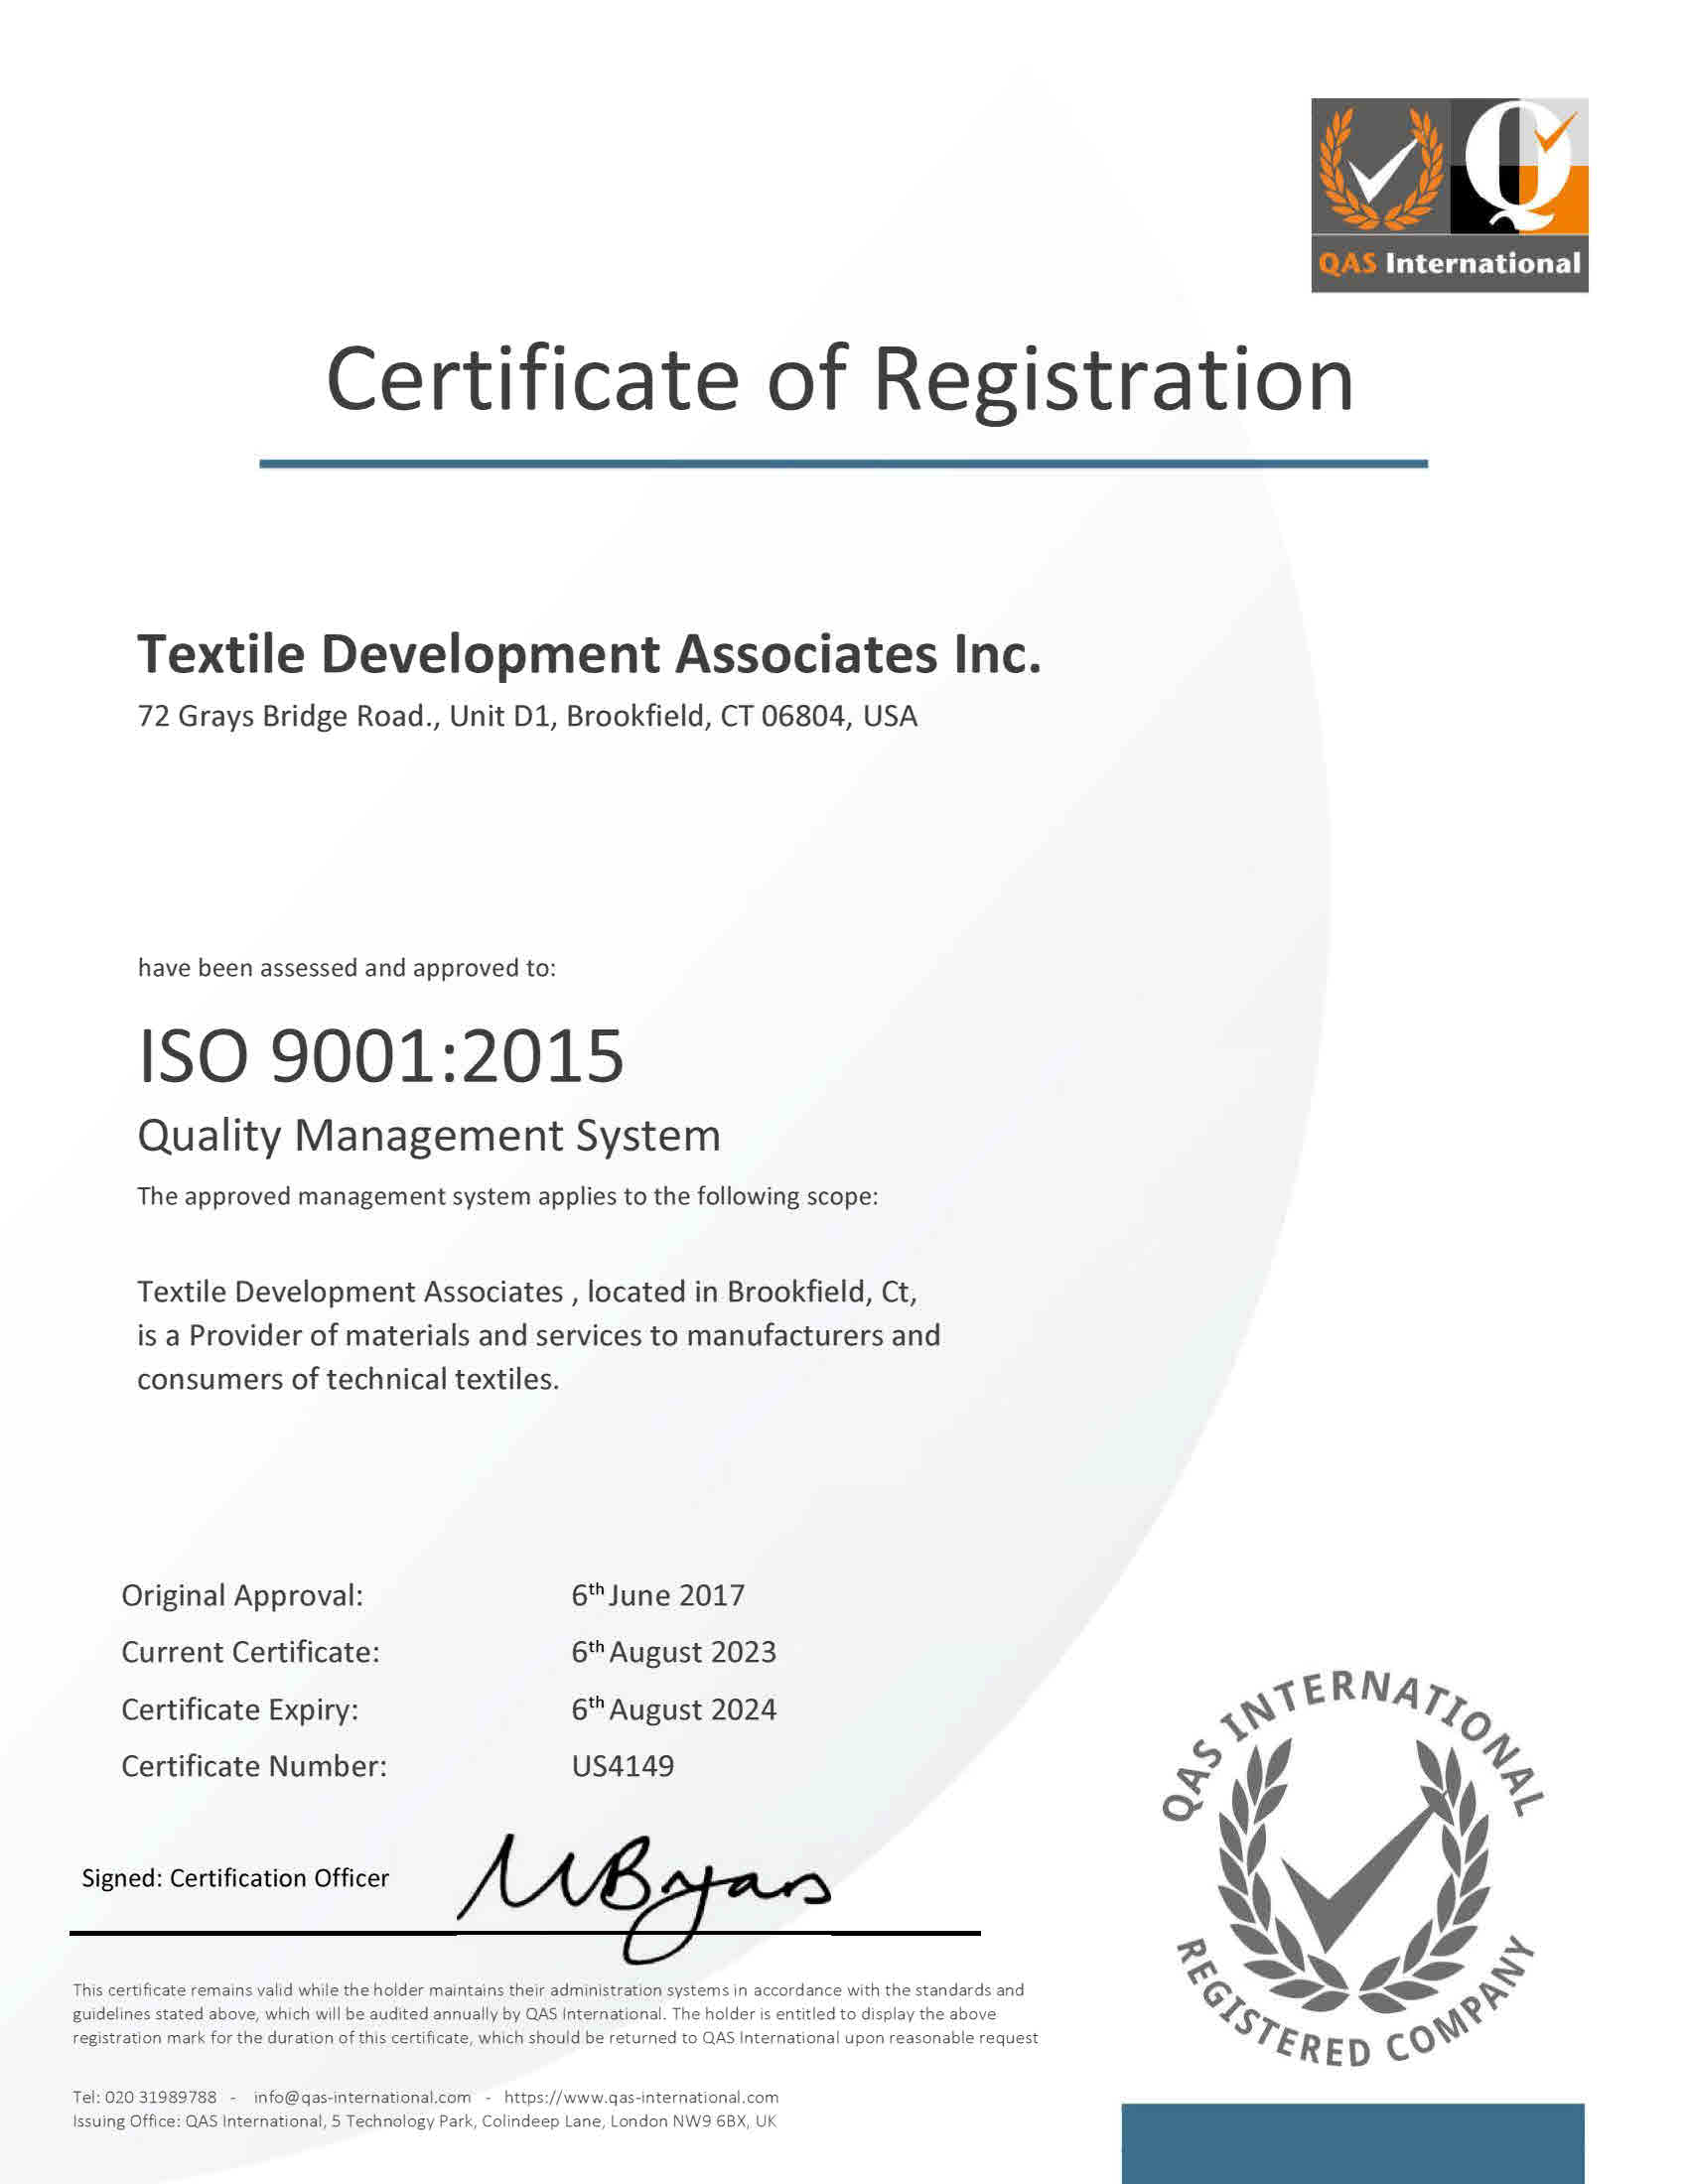 TDA ISO certificate